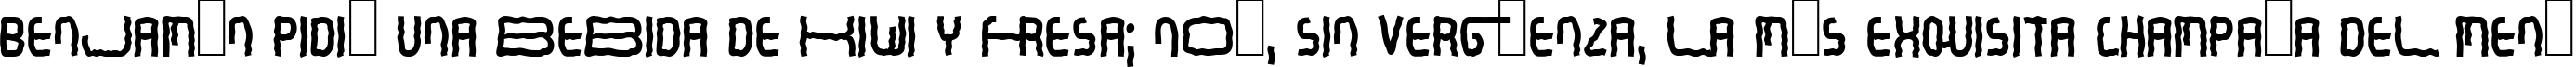 Пример написания шрифтом Commerciality текста на испанском